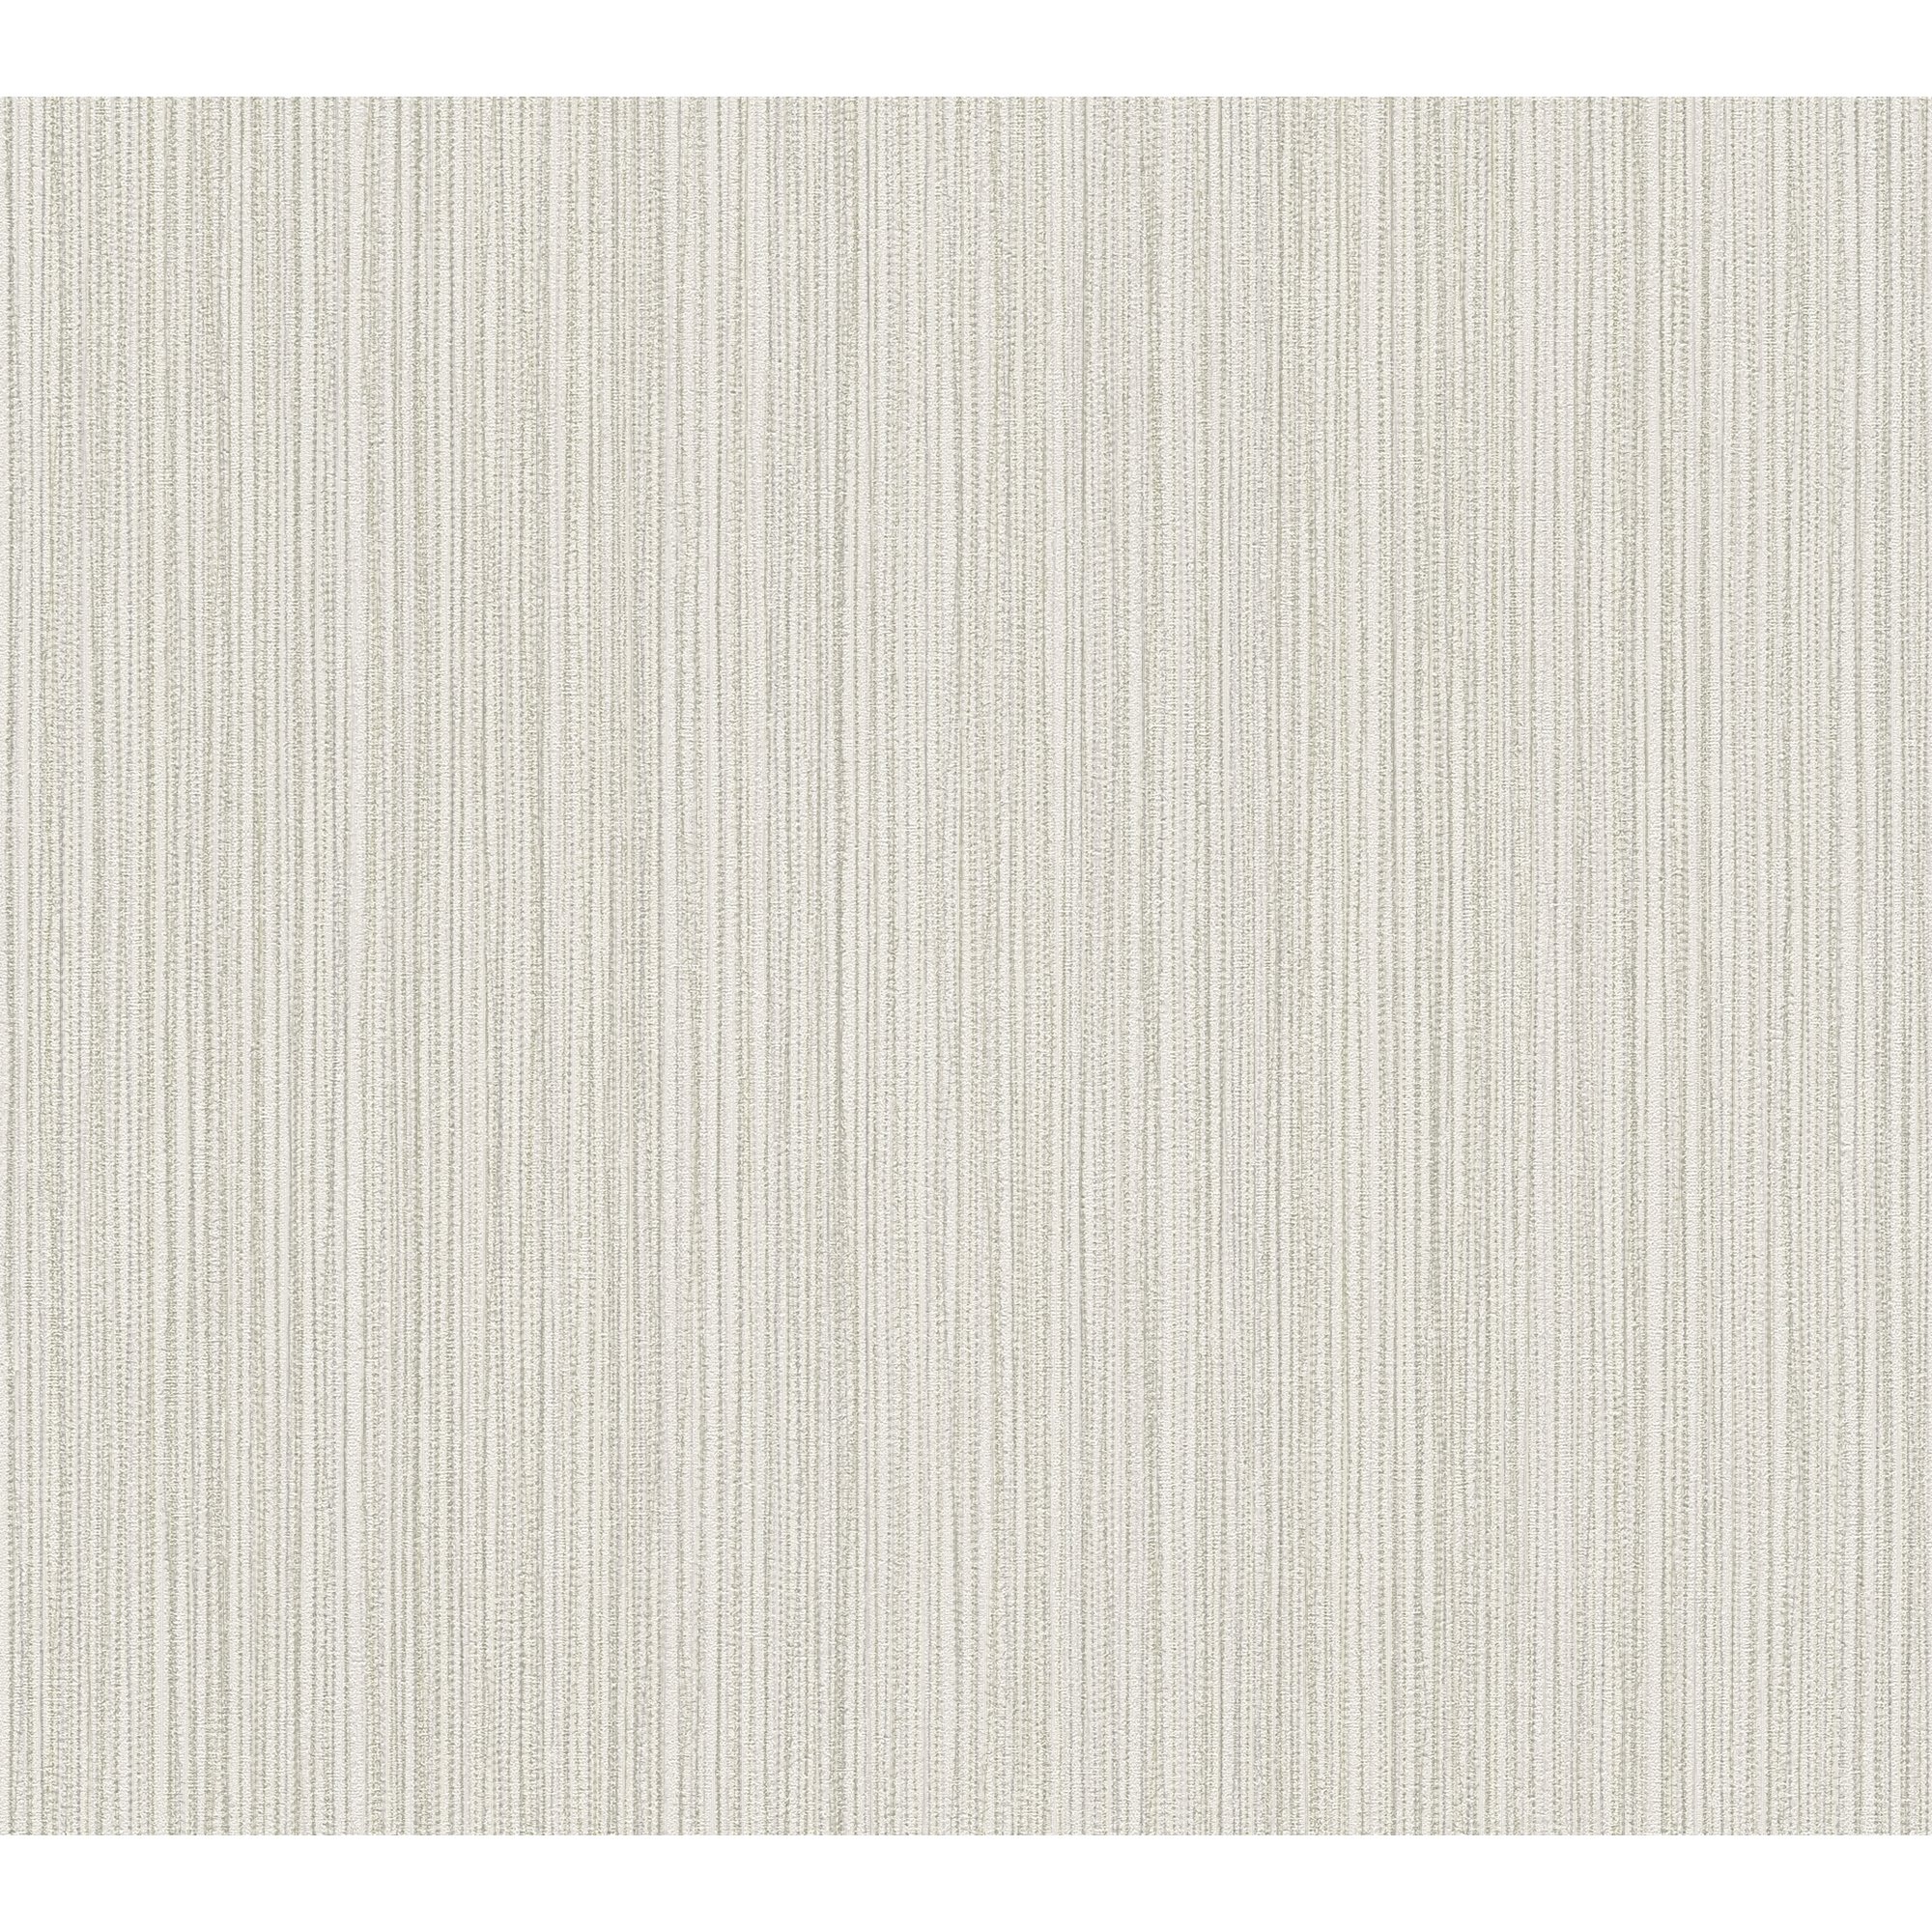 Vliestapete 'The BoS' Streifen grau 10,05 x 0,53 m + product picture